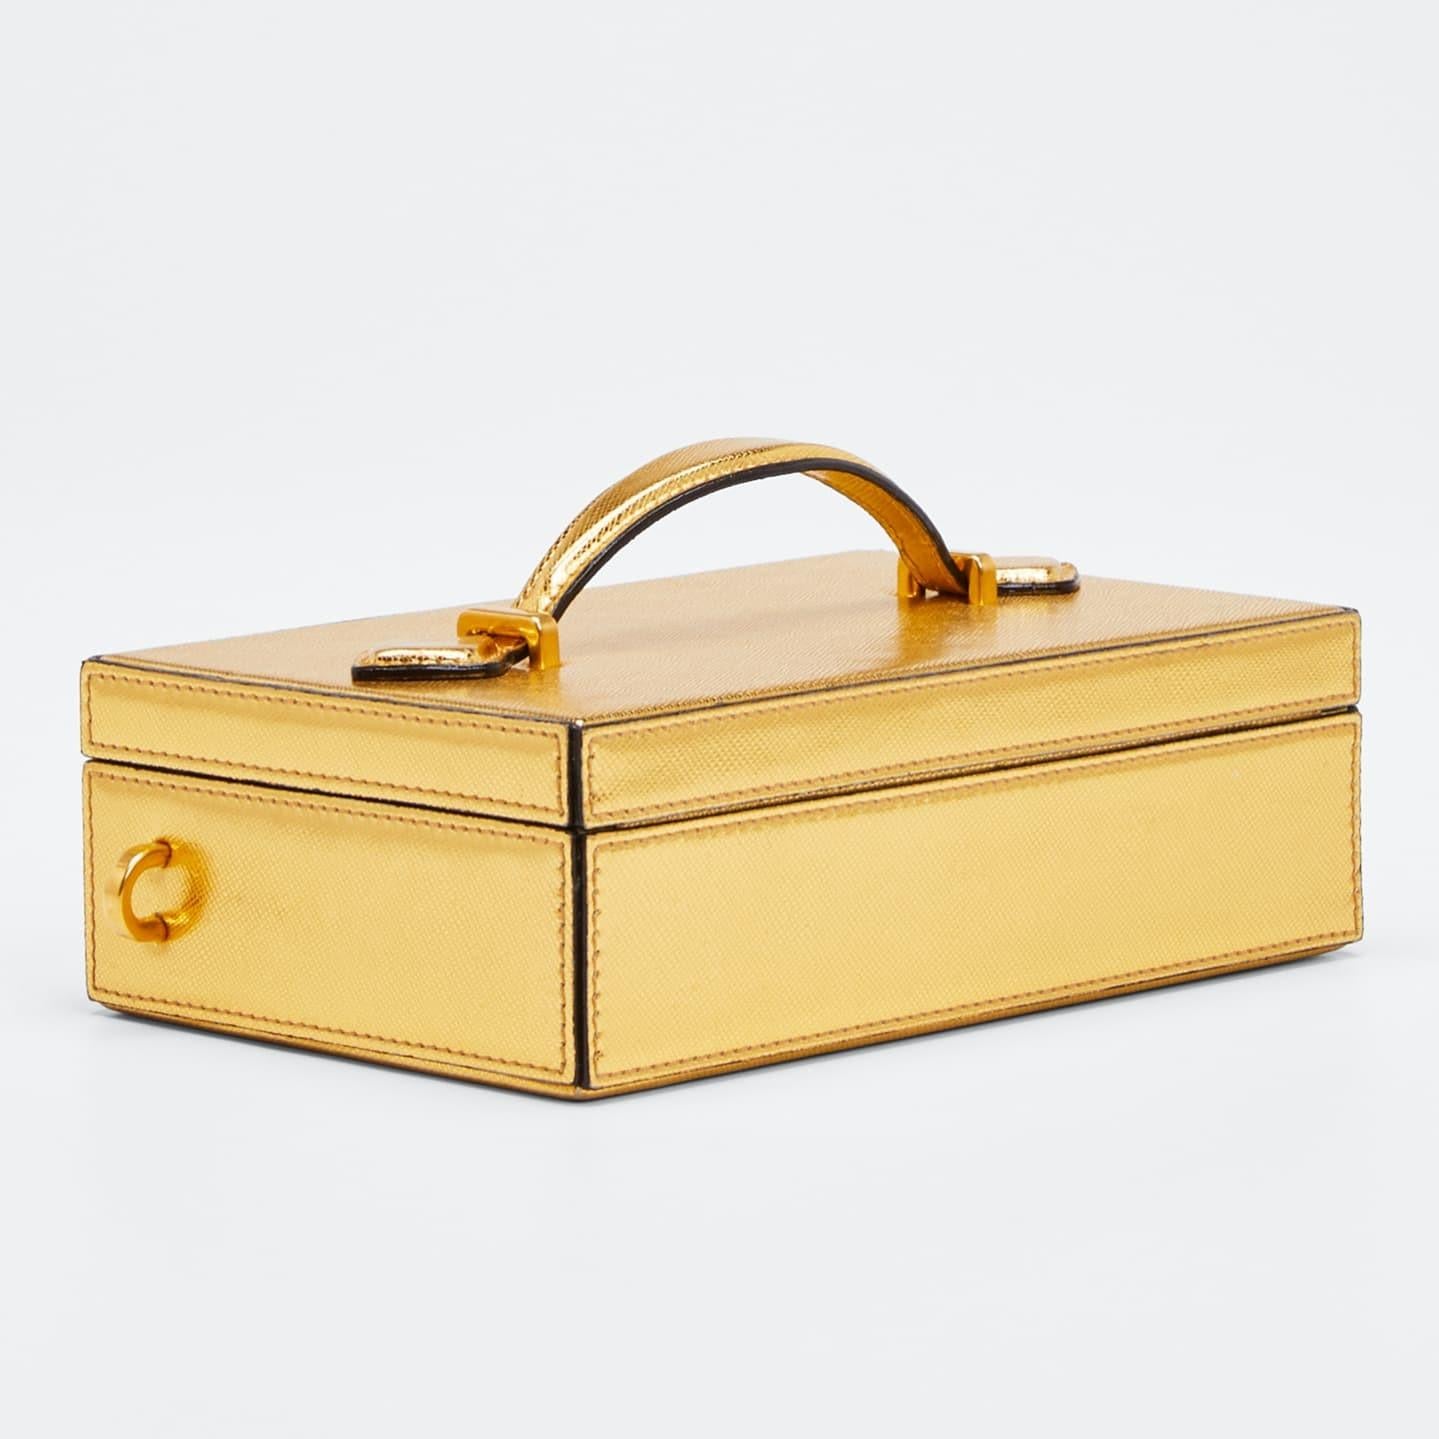 New Rare Oscar De La Renta 2020 Gold Alibi Minaudière Bag With Box & Tags $1890 10